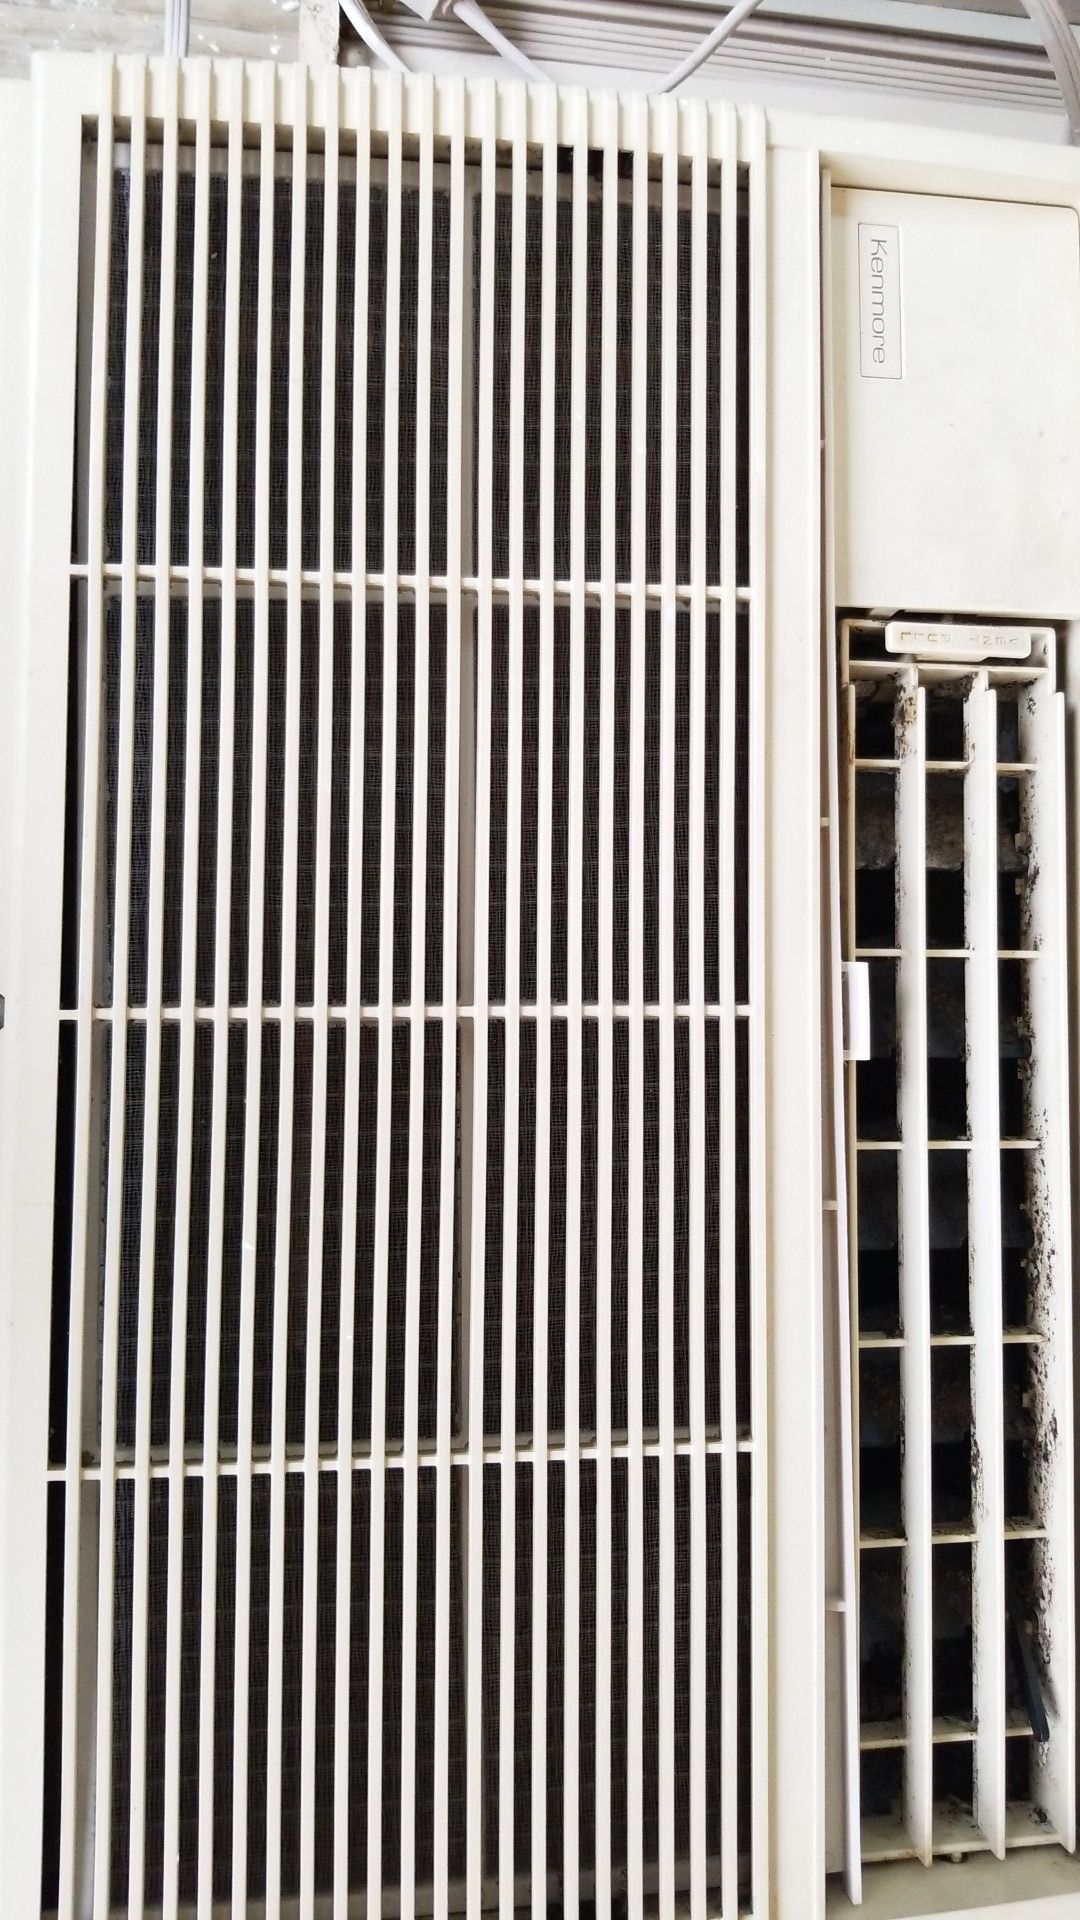 3 Air Conditioner window units